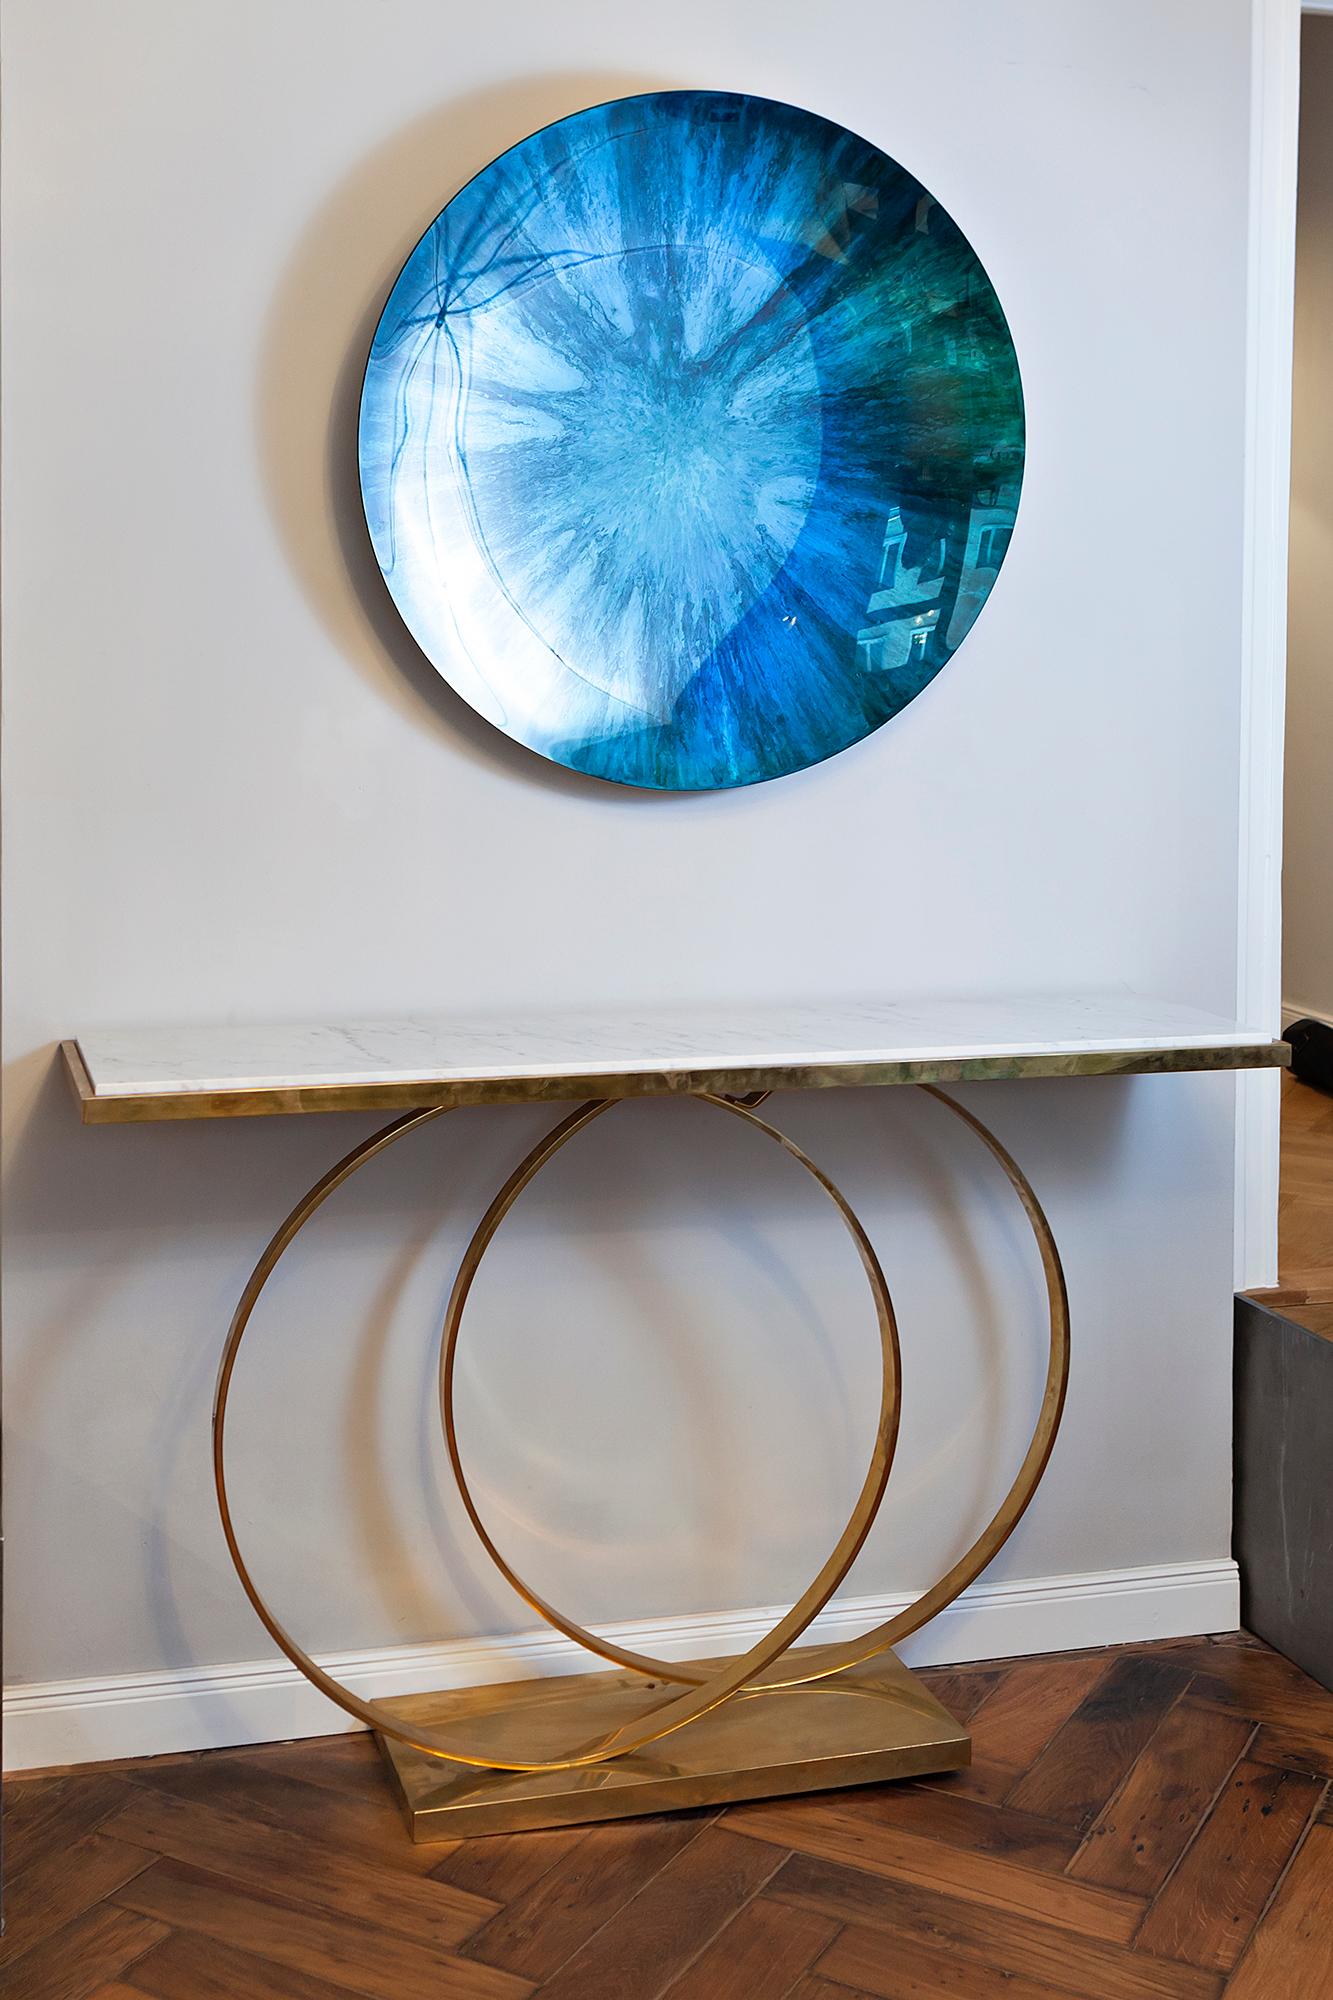 Contemporary Mirror Object by Christophe Gaignon, Blue Green Color